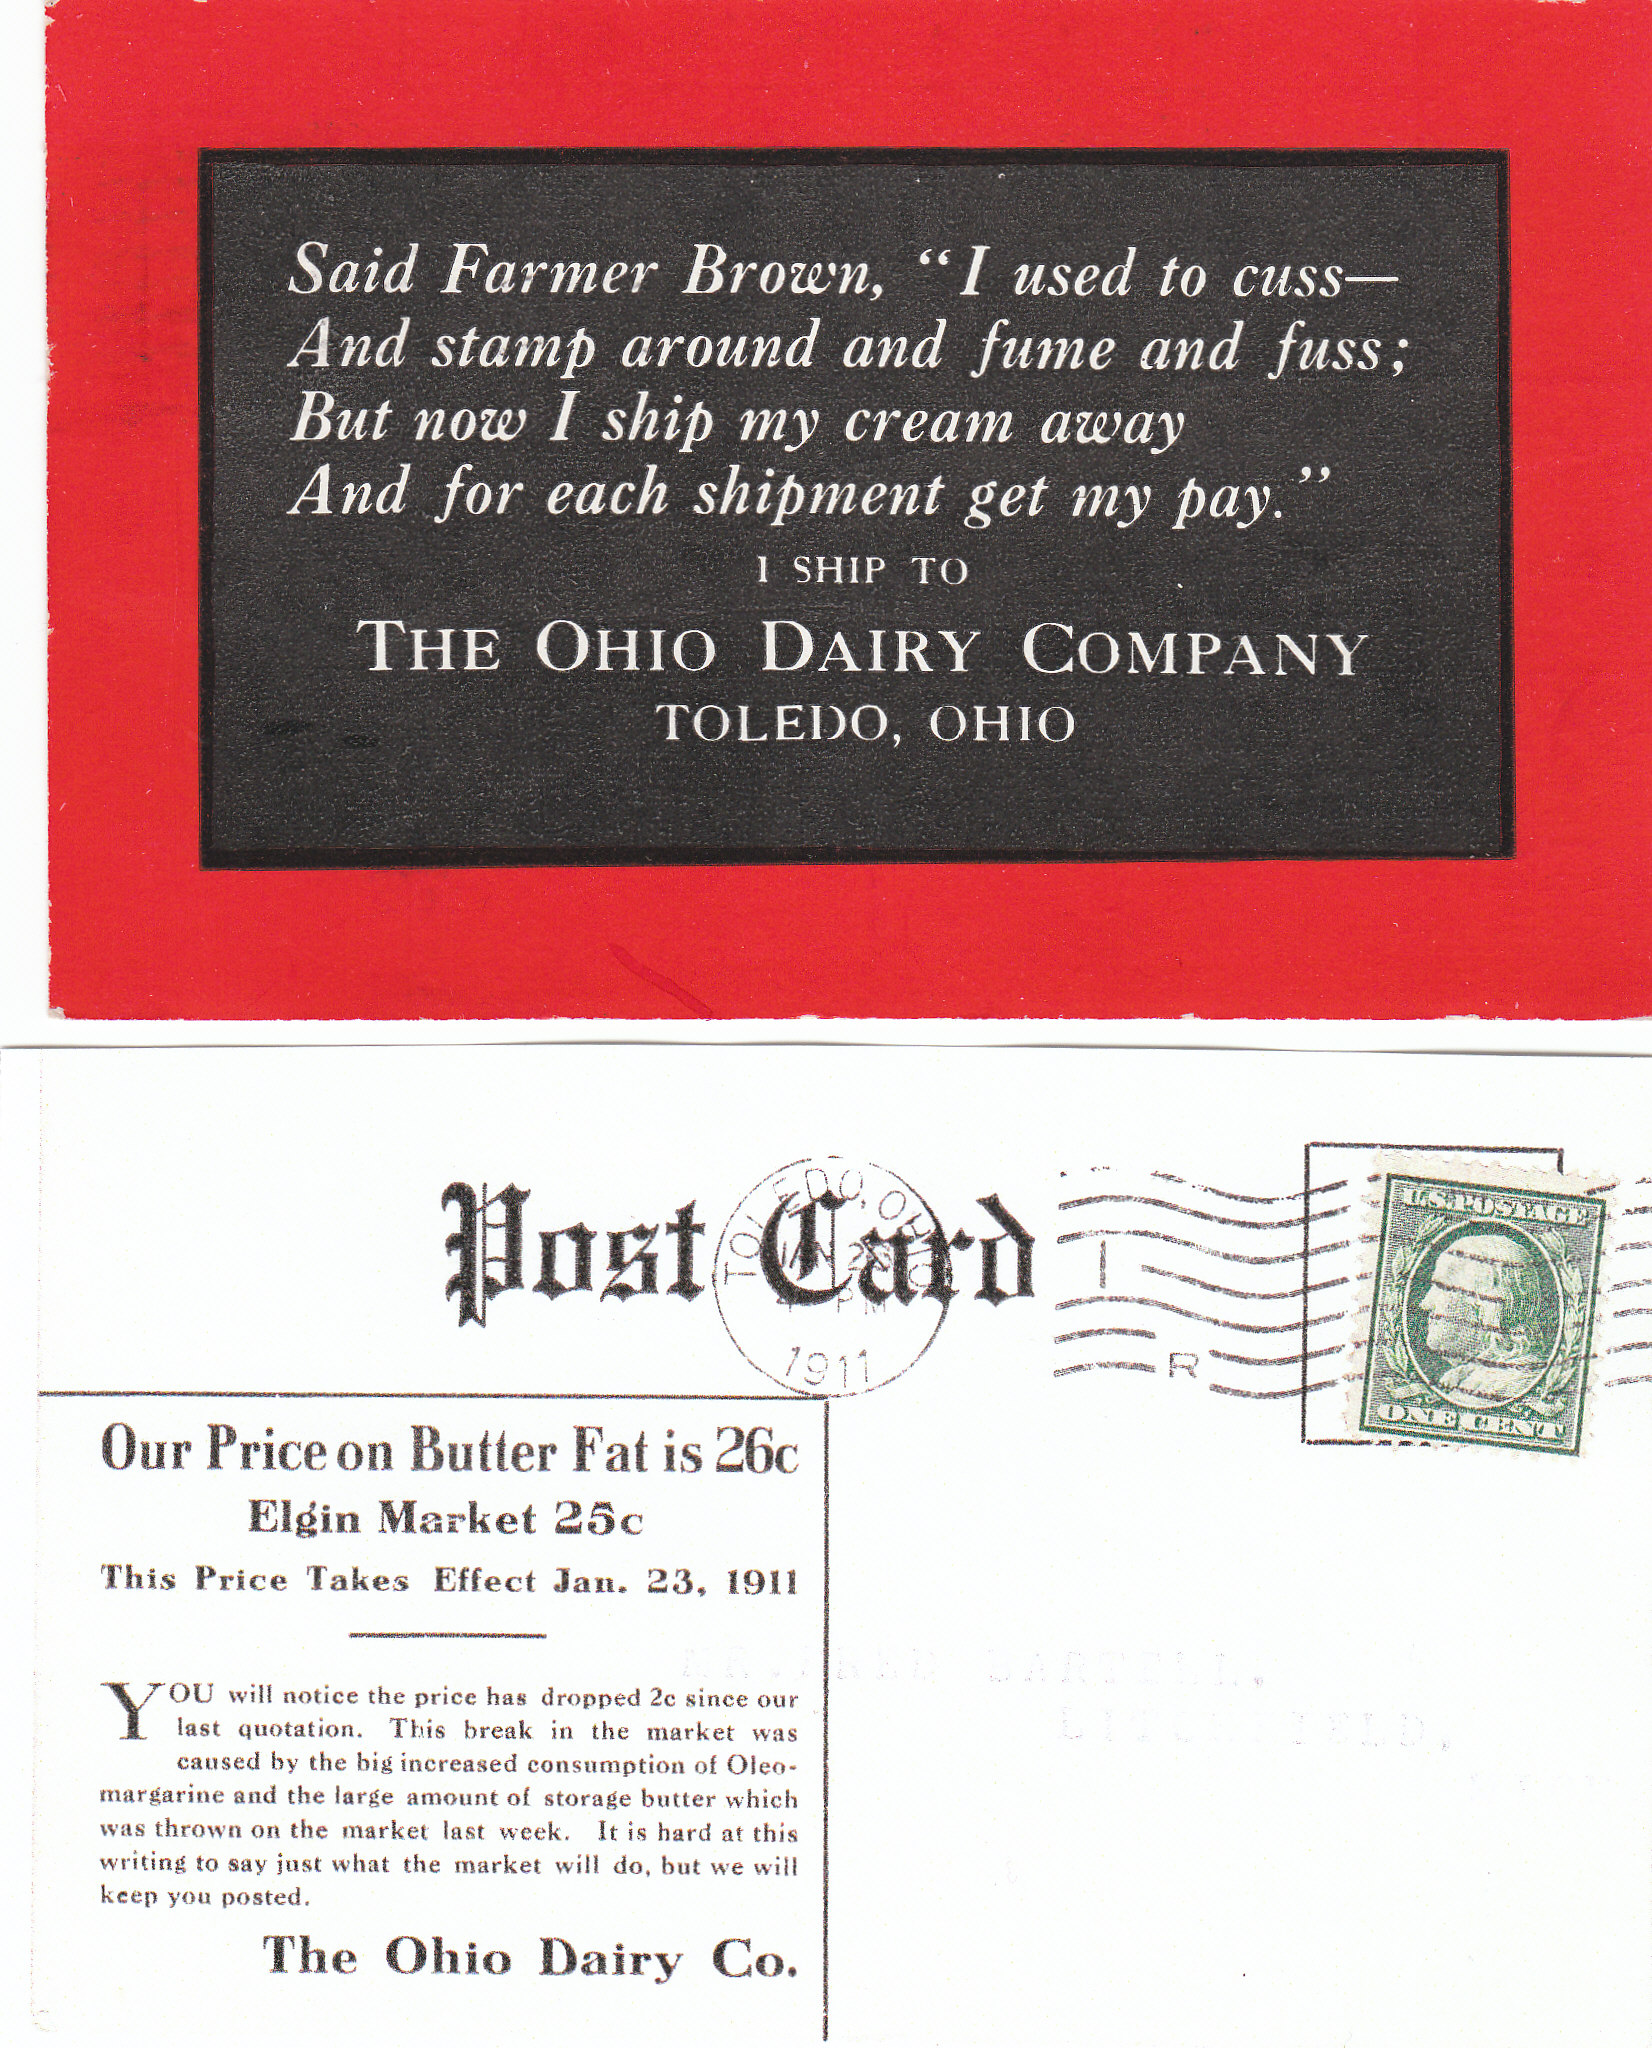 Ohio Dairy Farmer Brown Postcard